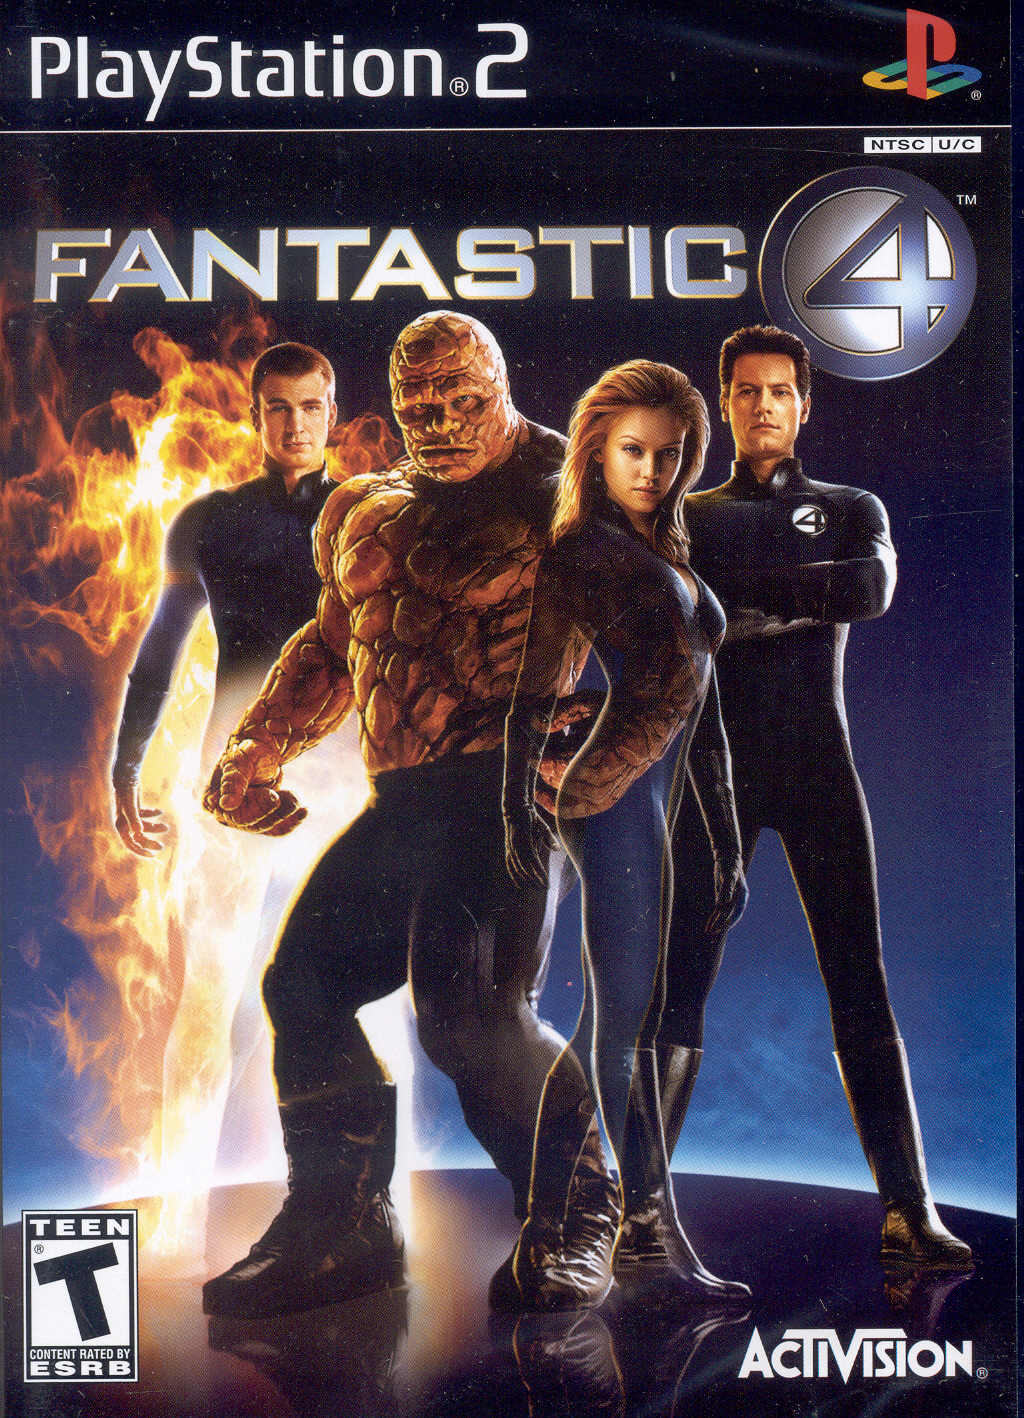 Fantastic Four Games Free